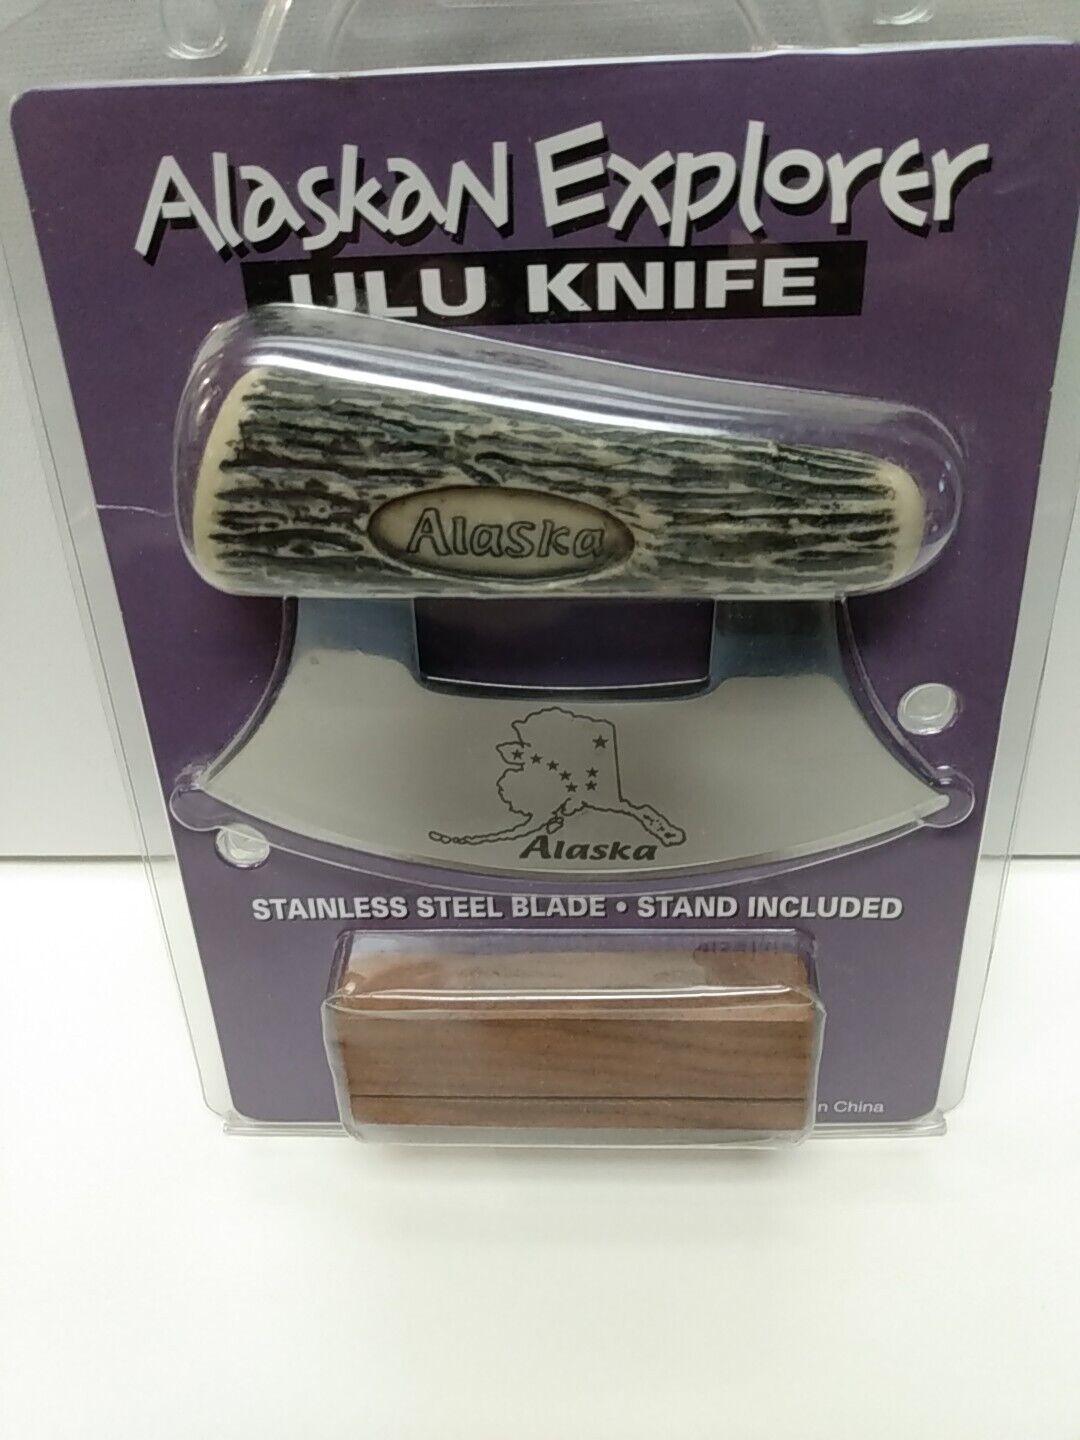 NEW Alaskan Explorer Stainless Steel Blade ULU Knife with Wood Display Stand NIB